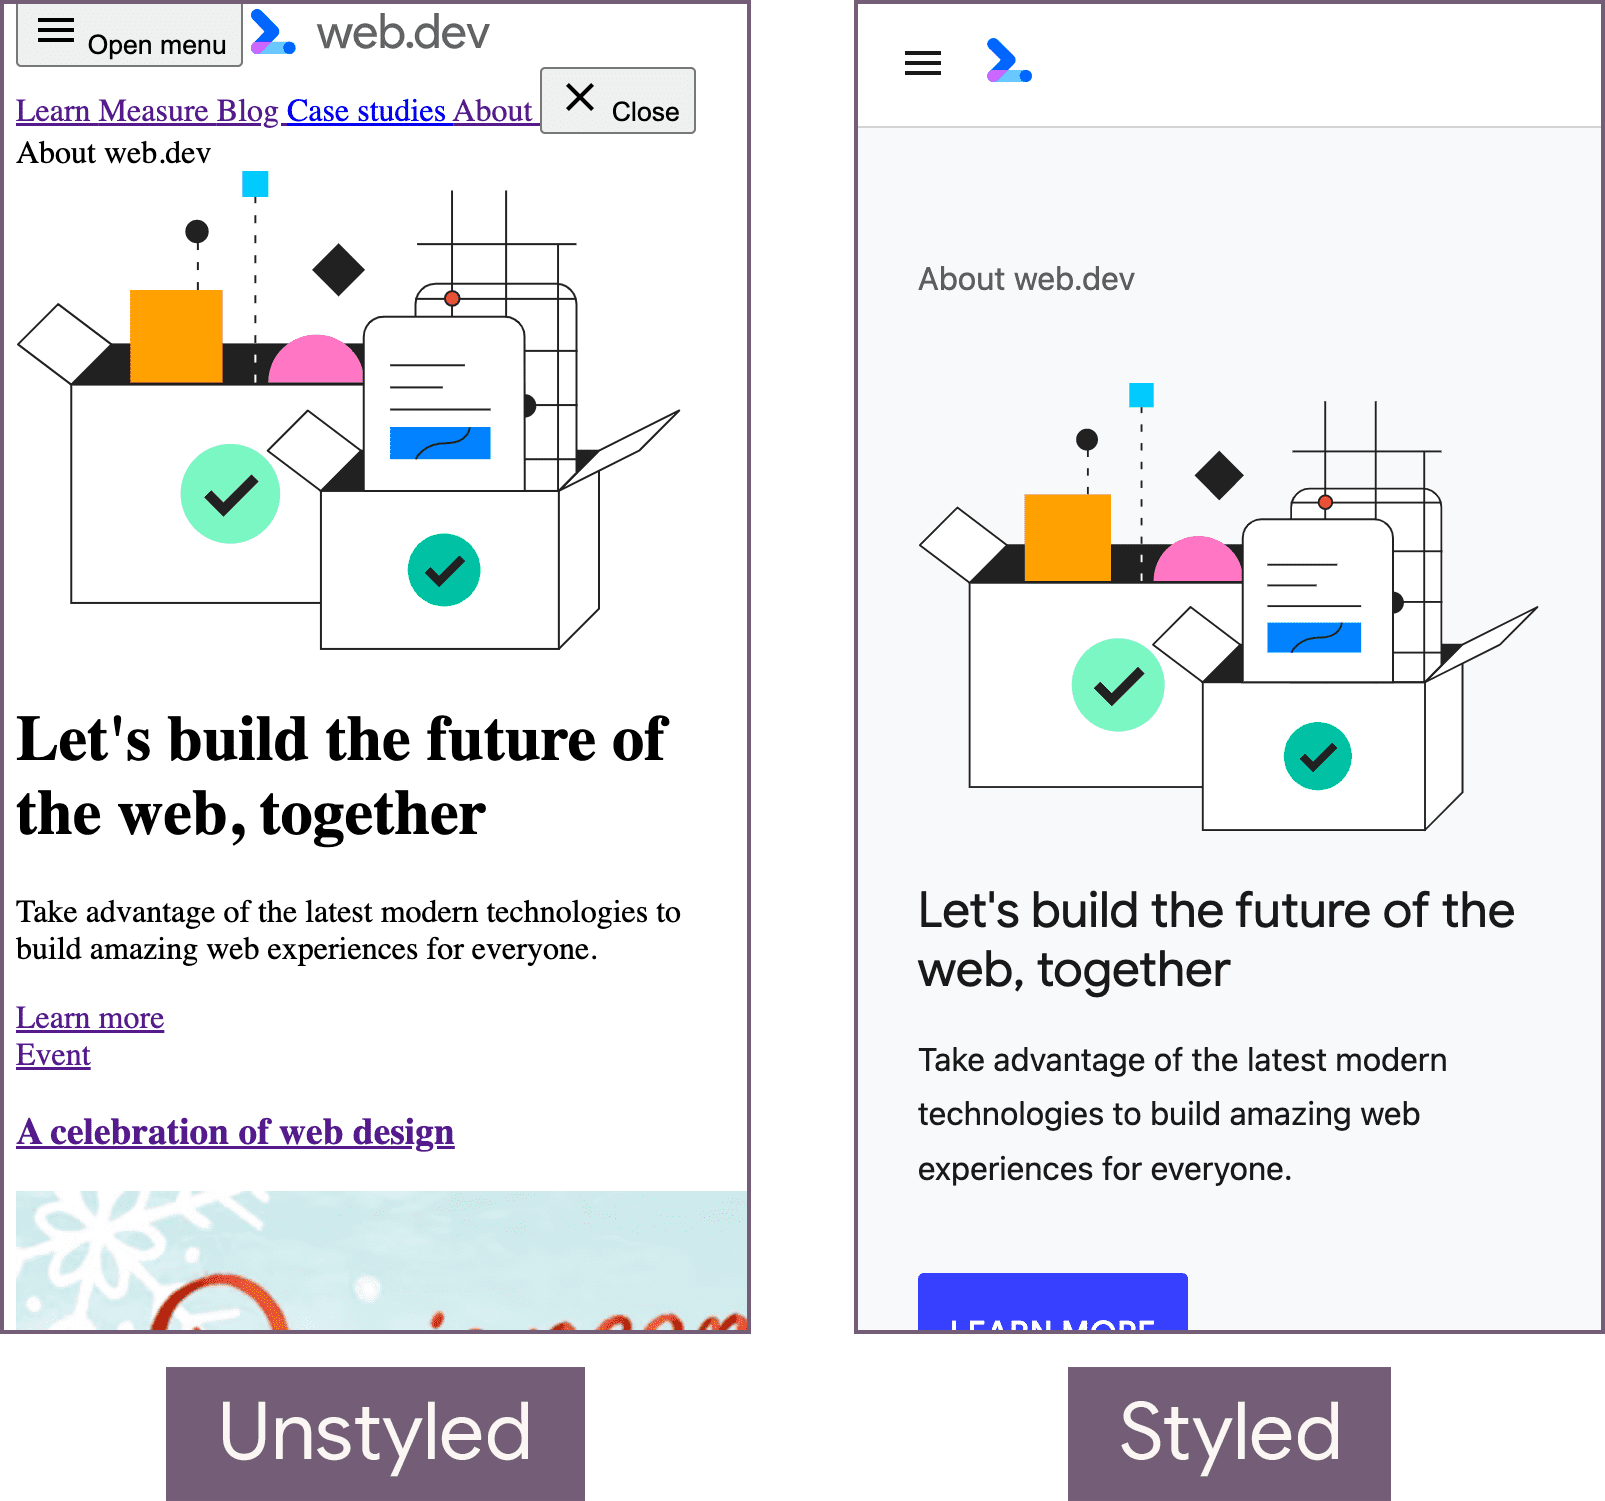 Halaman beranda web.dev dalam status tanpa gaya (kiri) dan status diberi gaya (kanan).